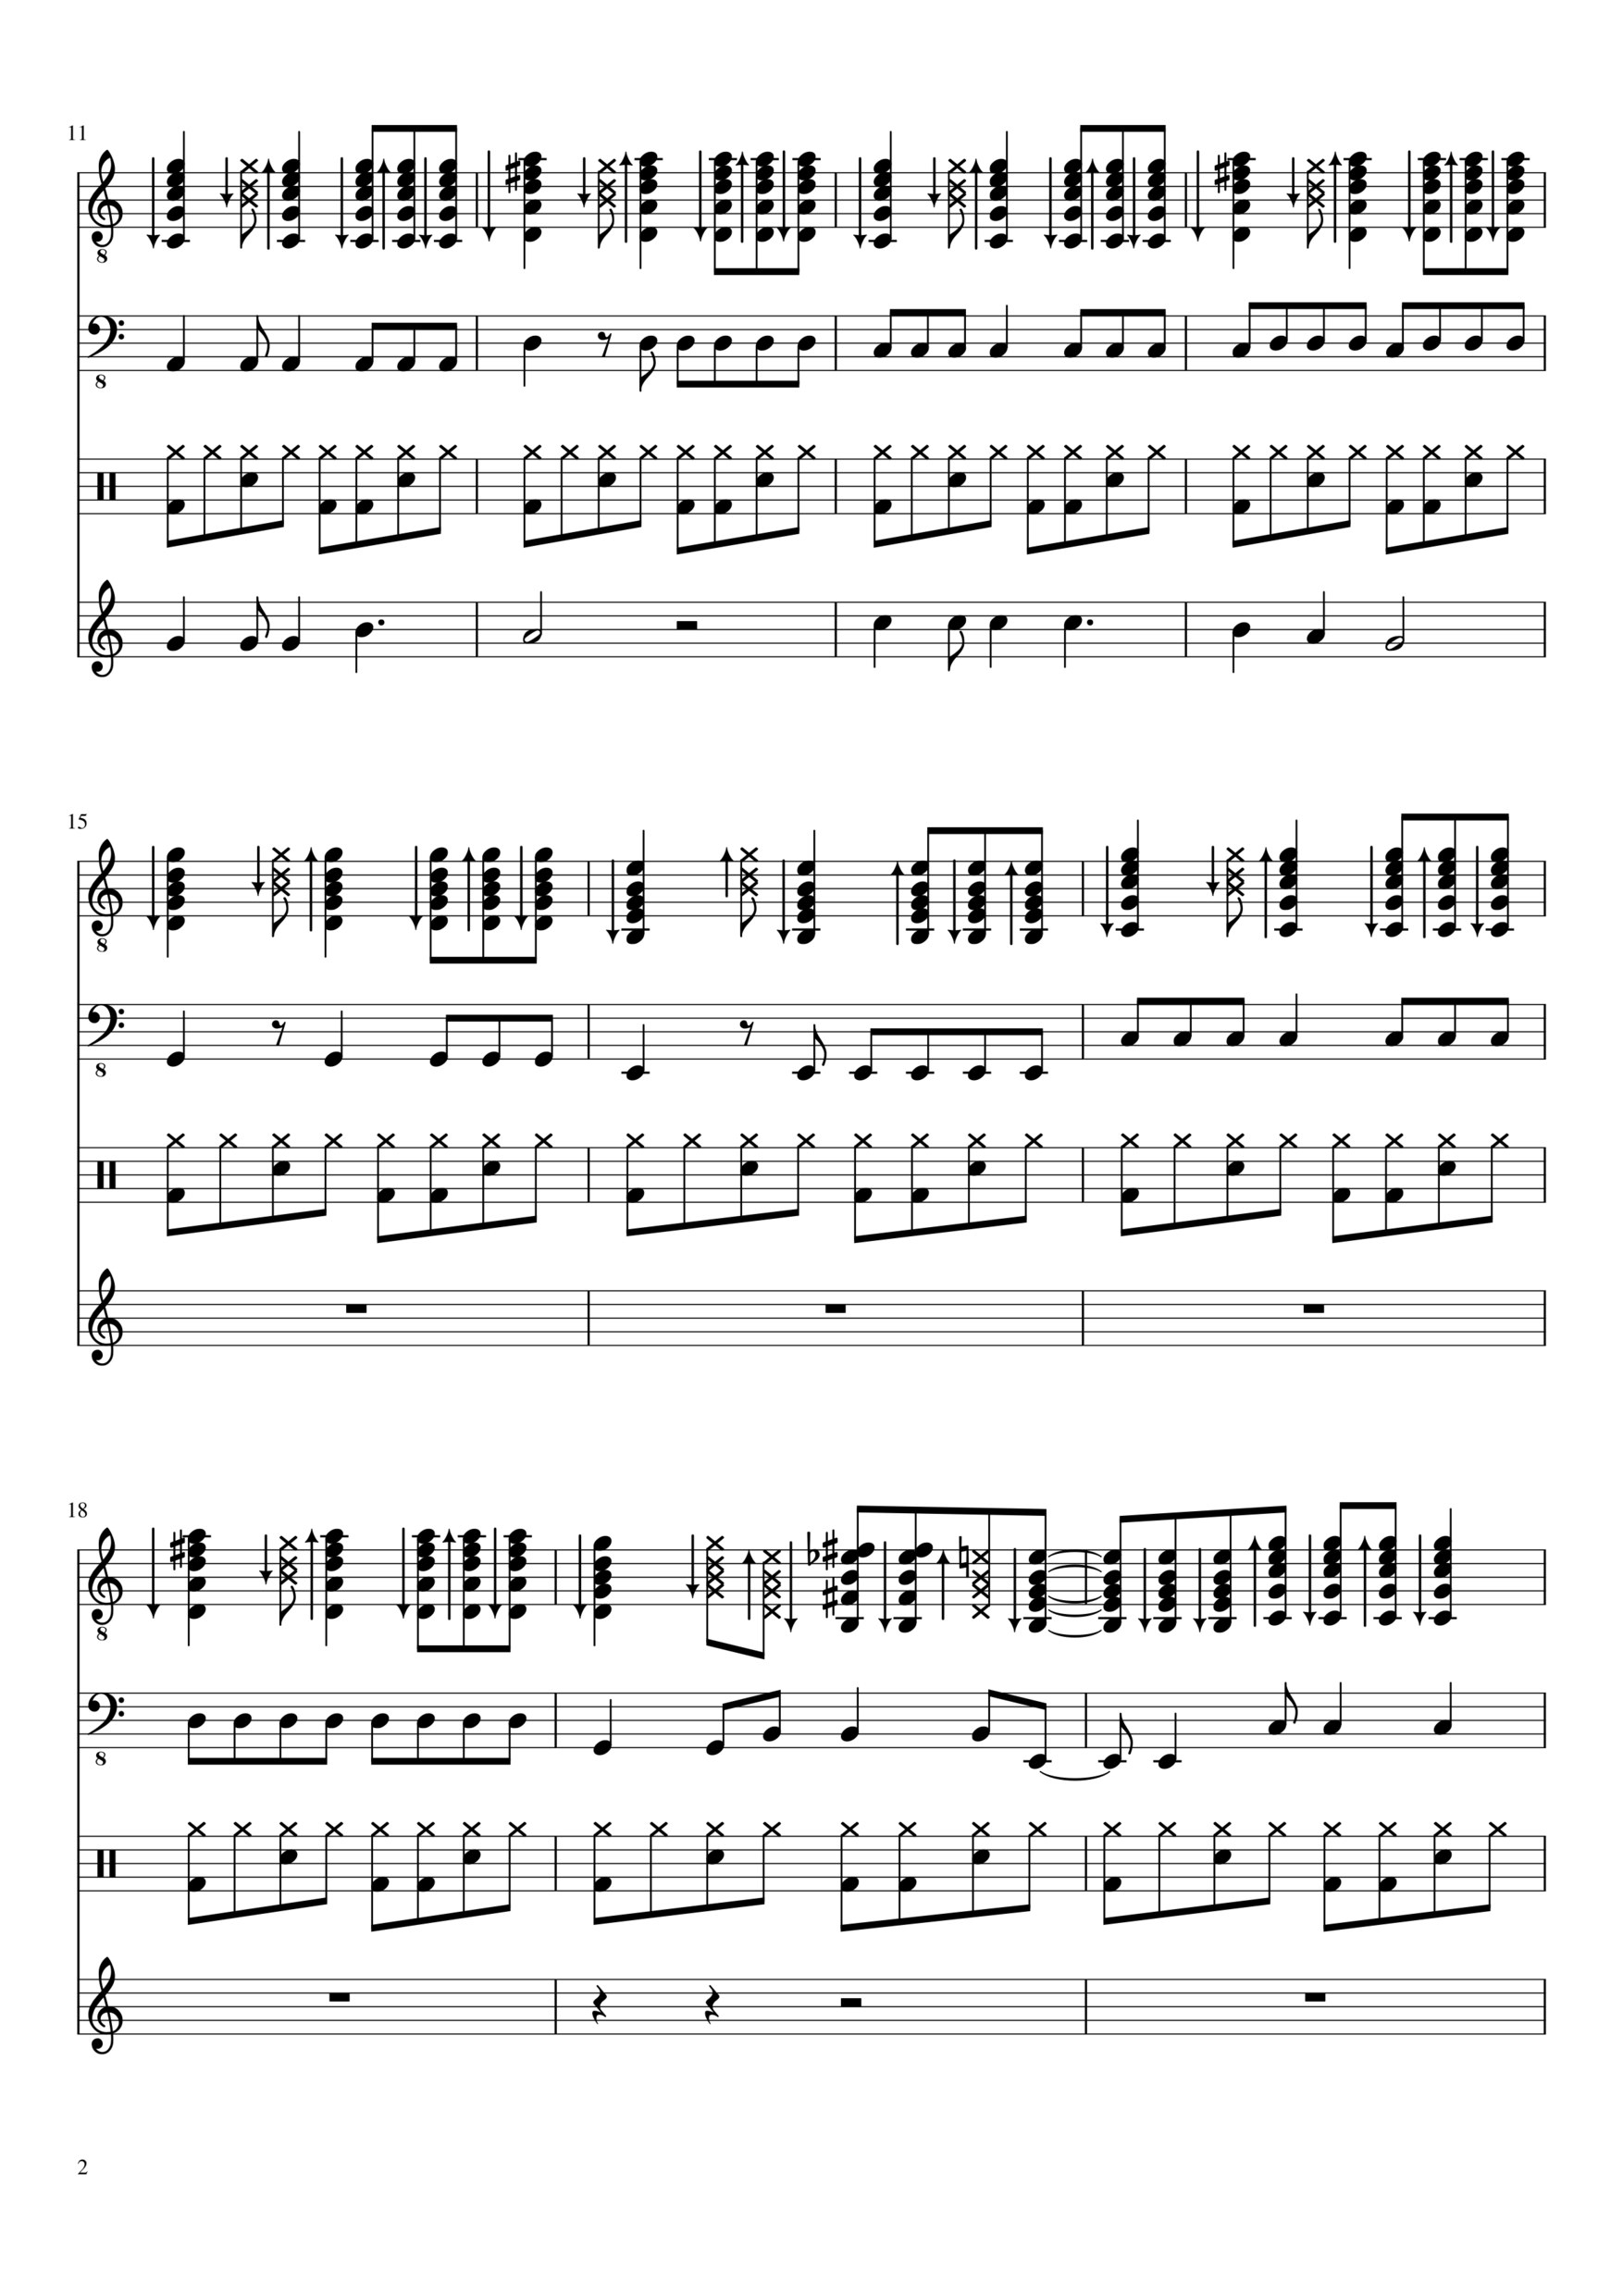 Skvoz dyiru v moey golove slide, Image 2